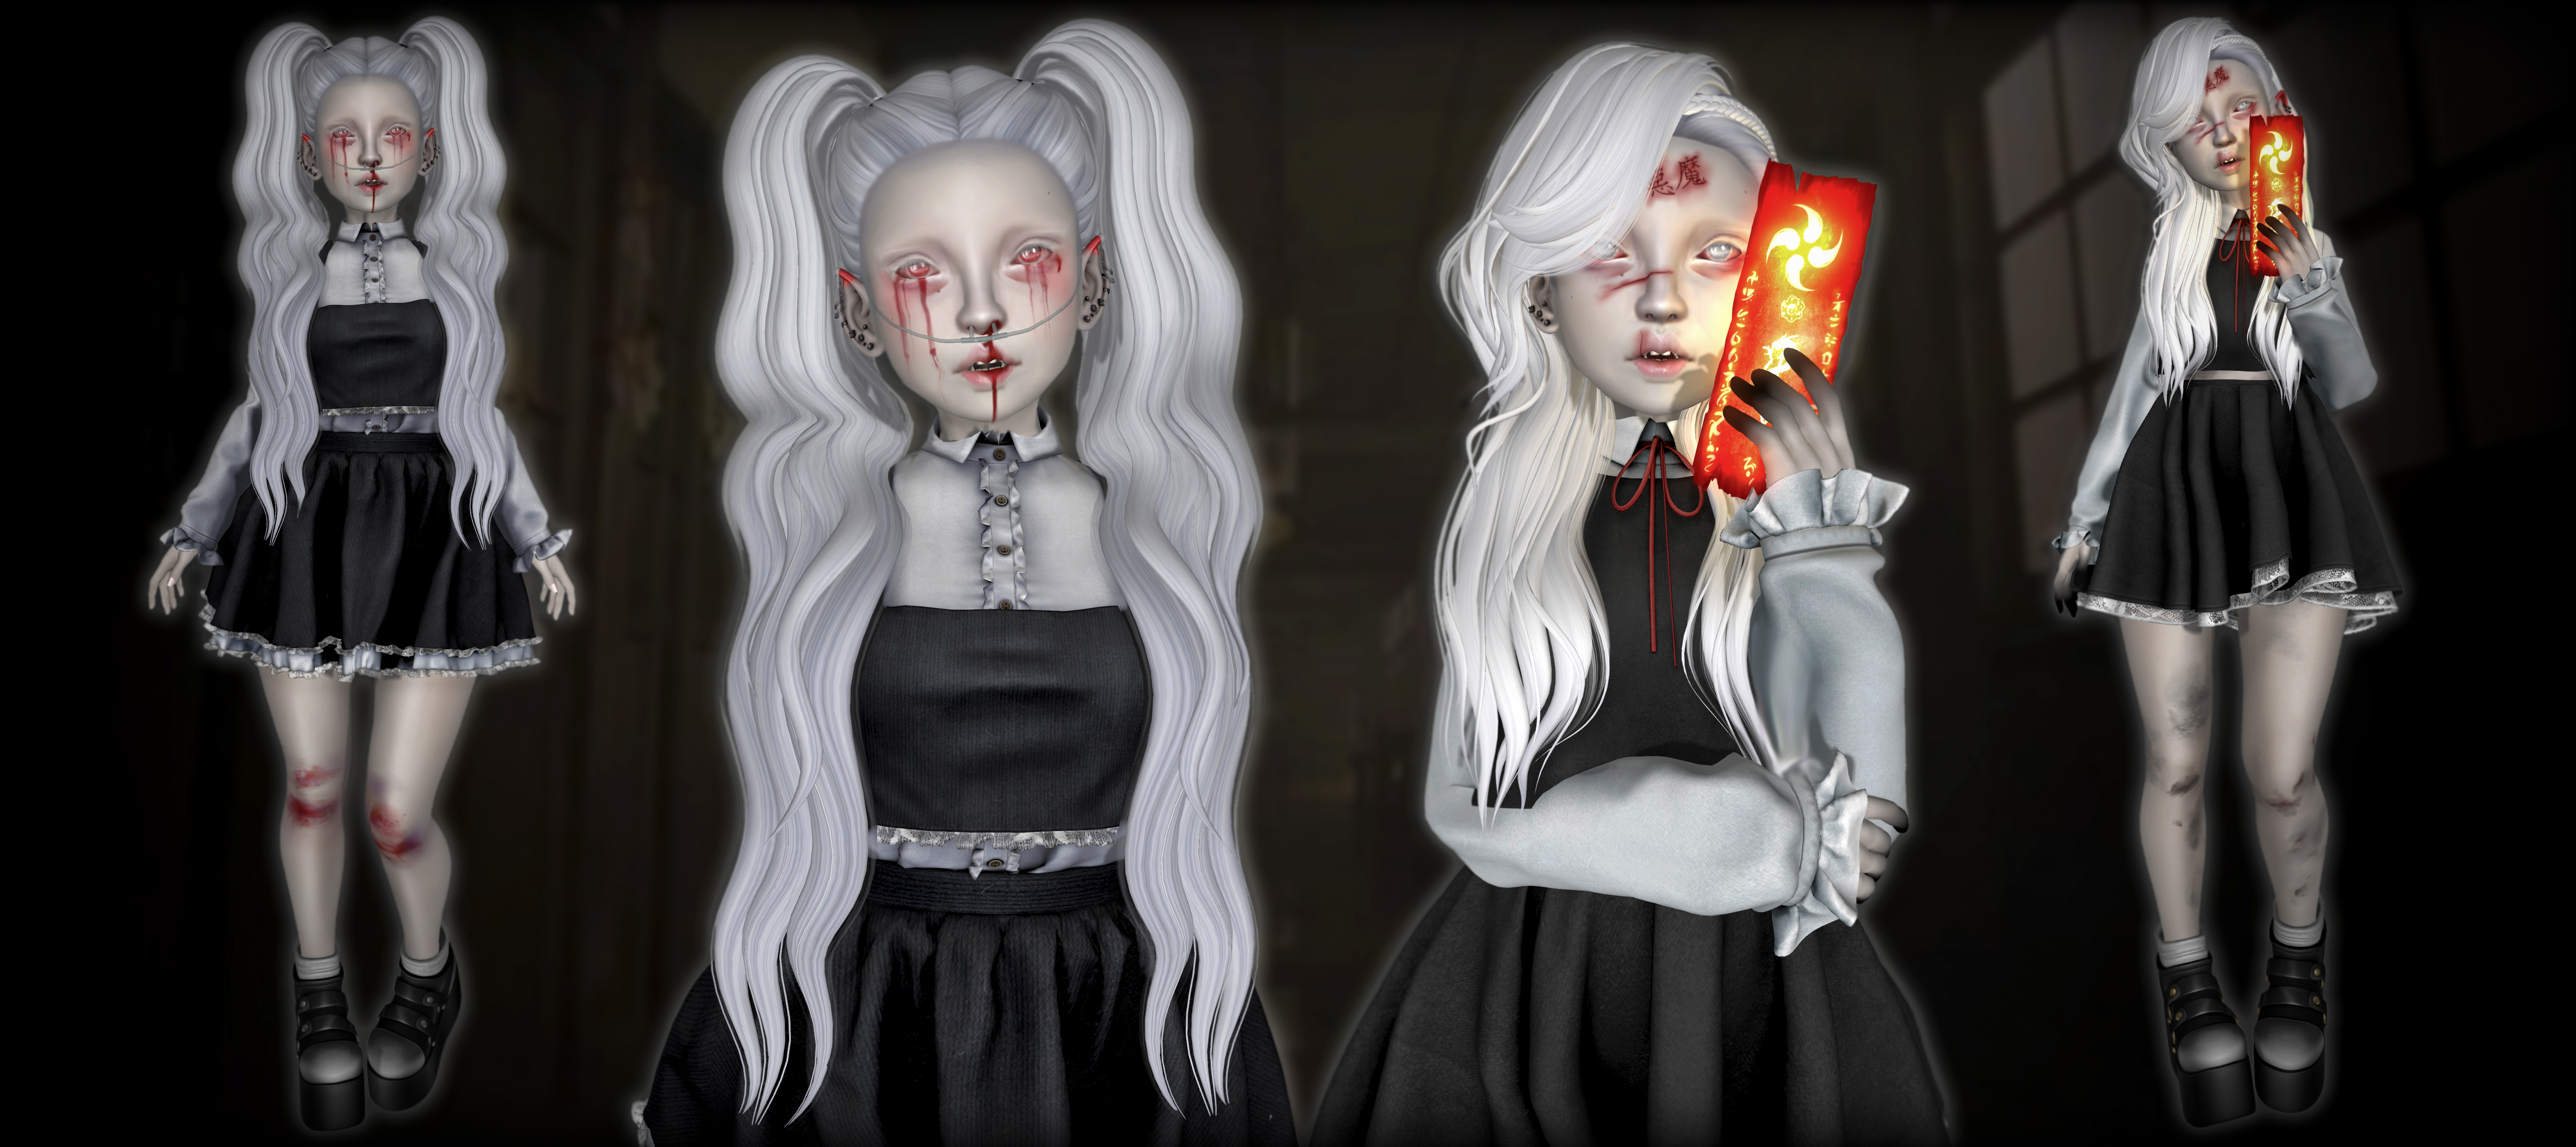 Wallpaper dark anime creepy fashion japanese gothic lolita clothing cute sl costume secondlife gothiclolita albinos goth subculture x